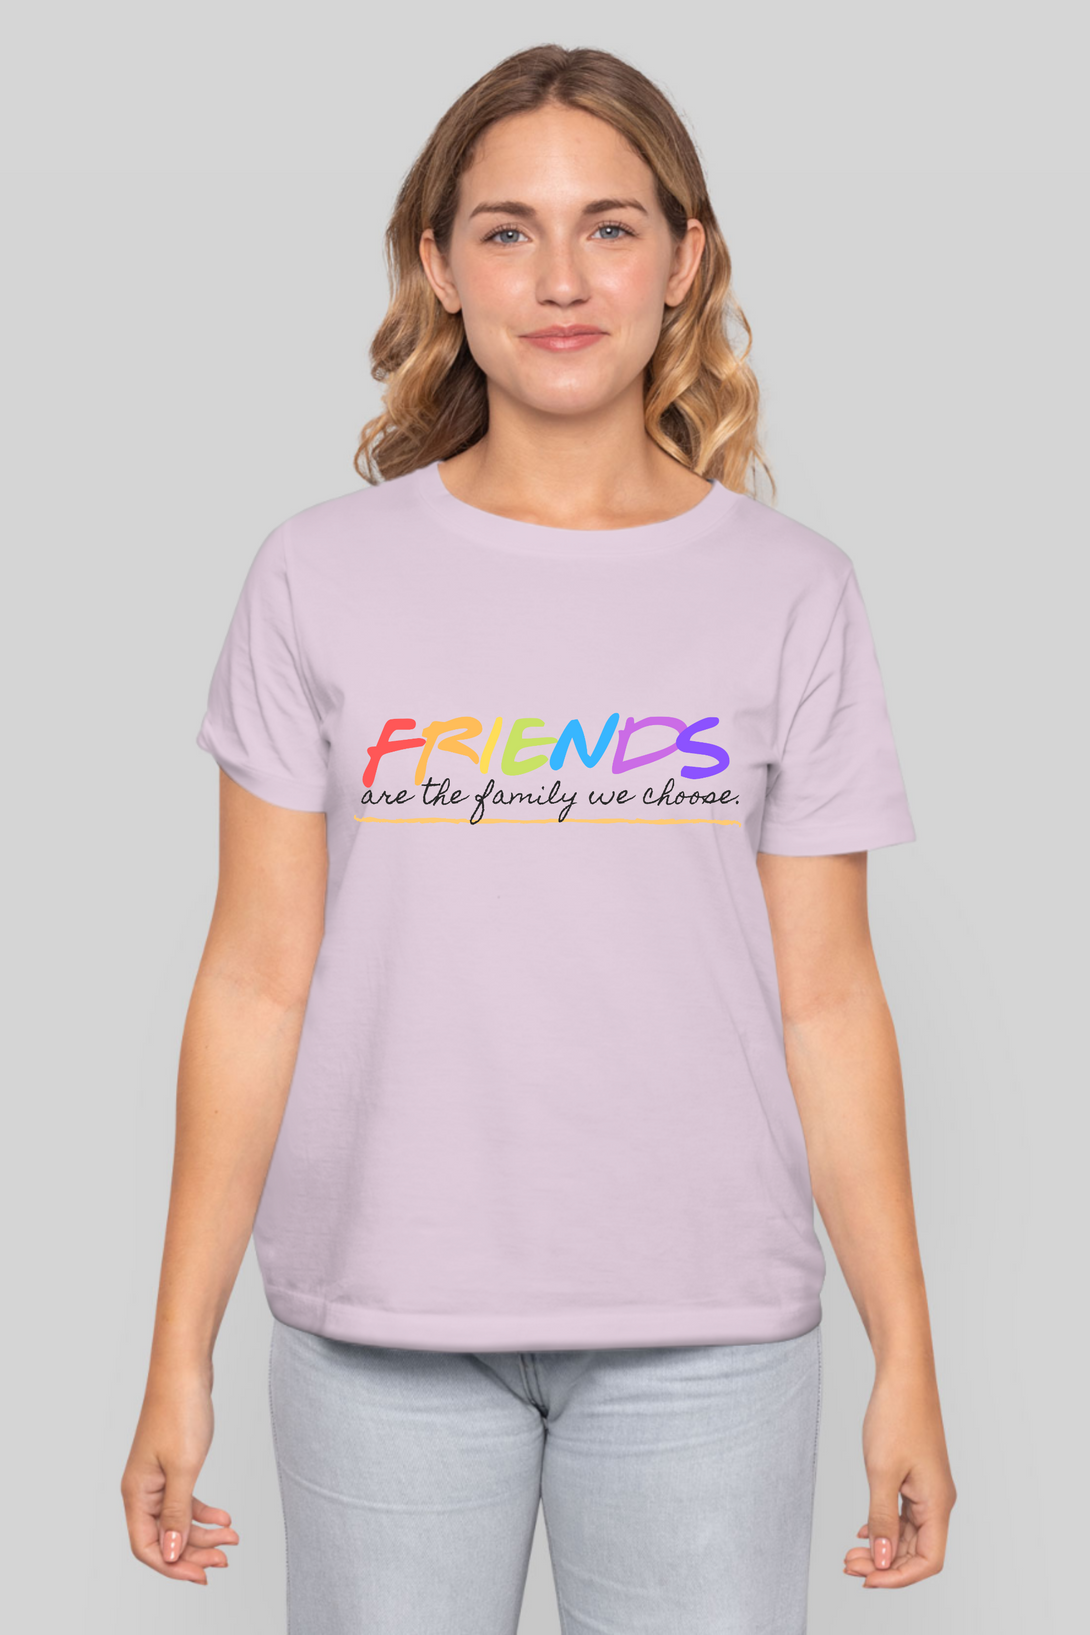 Chosen Family Printed T-Shirt For Women - WowWaves - 7